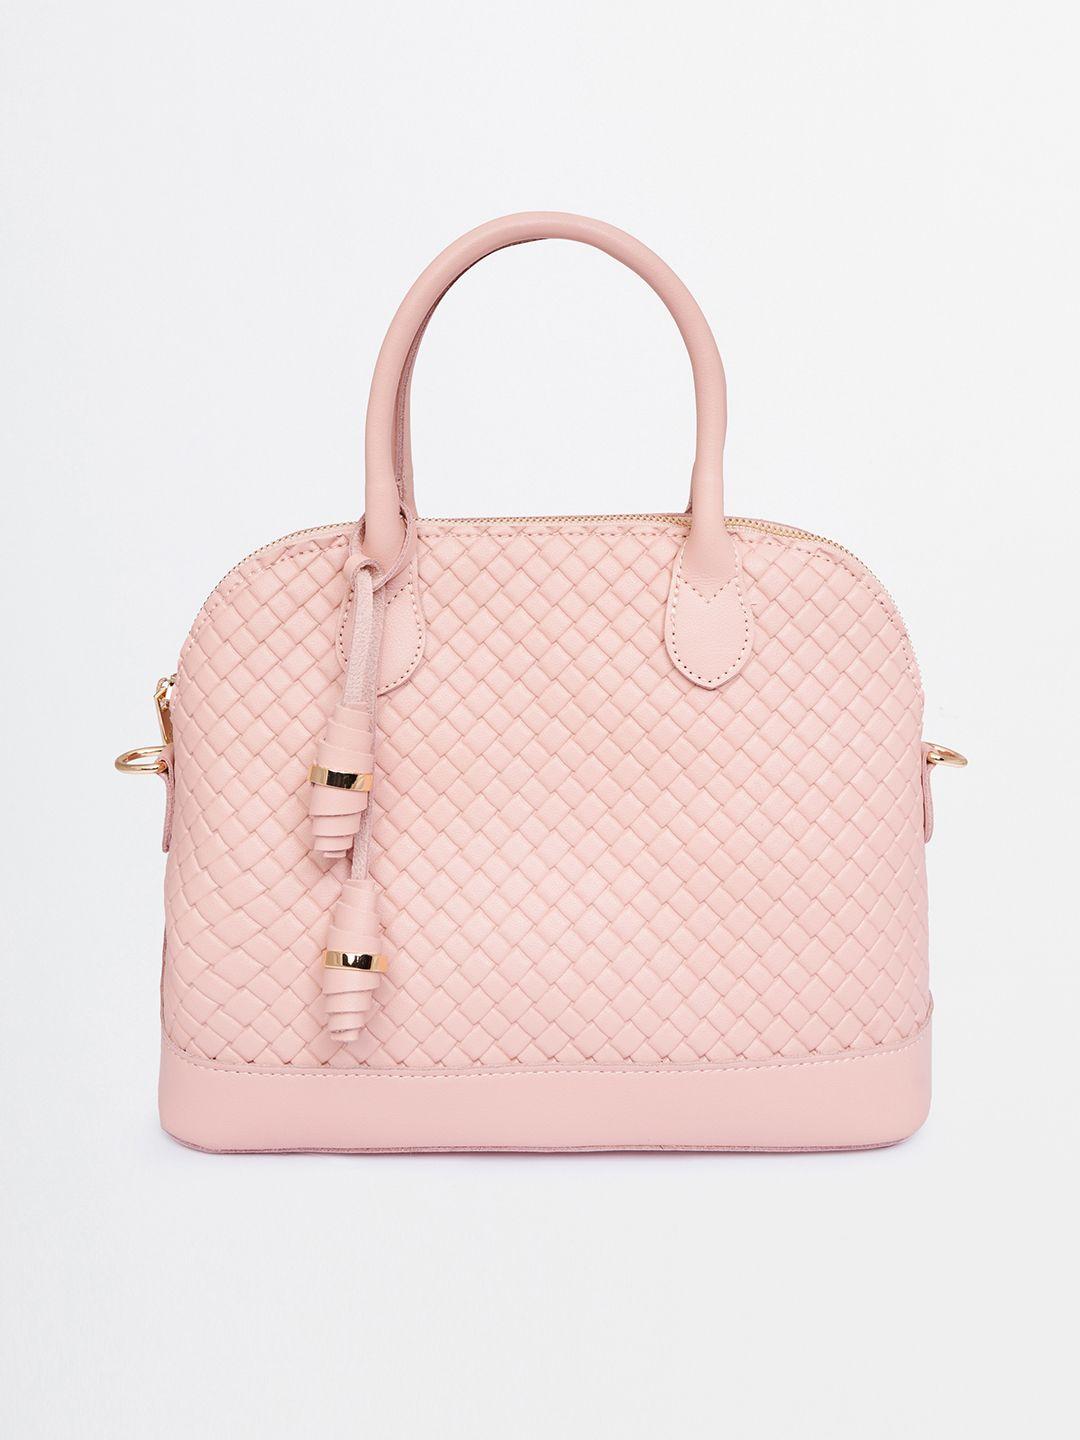 global desi pink textured structured handheld bag